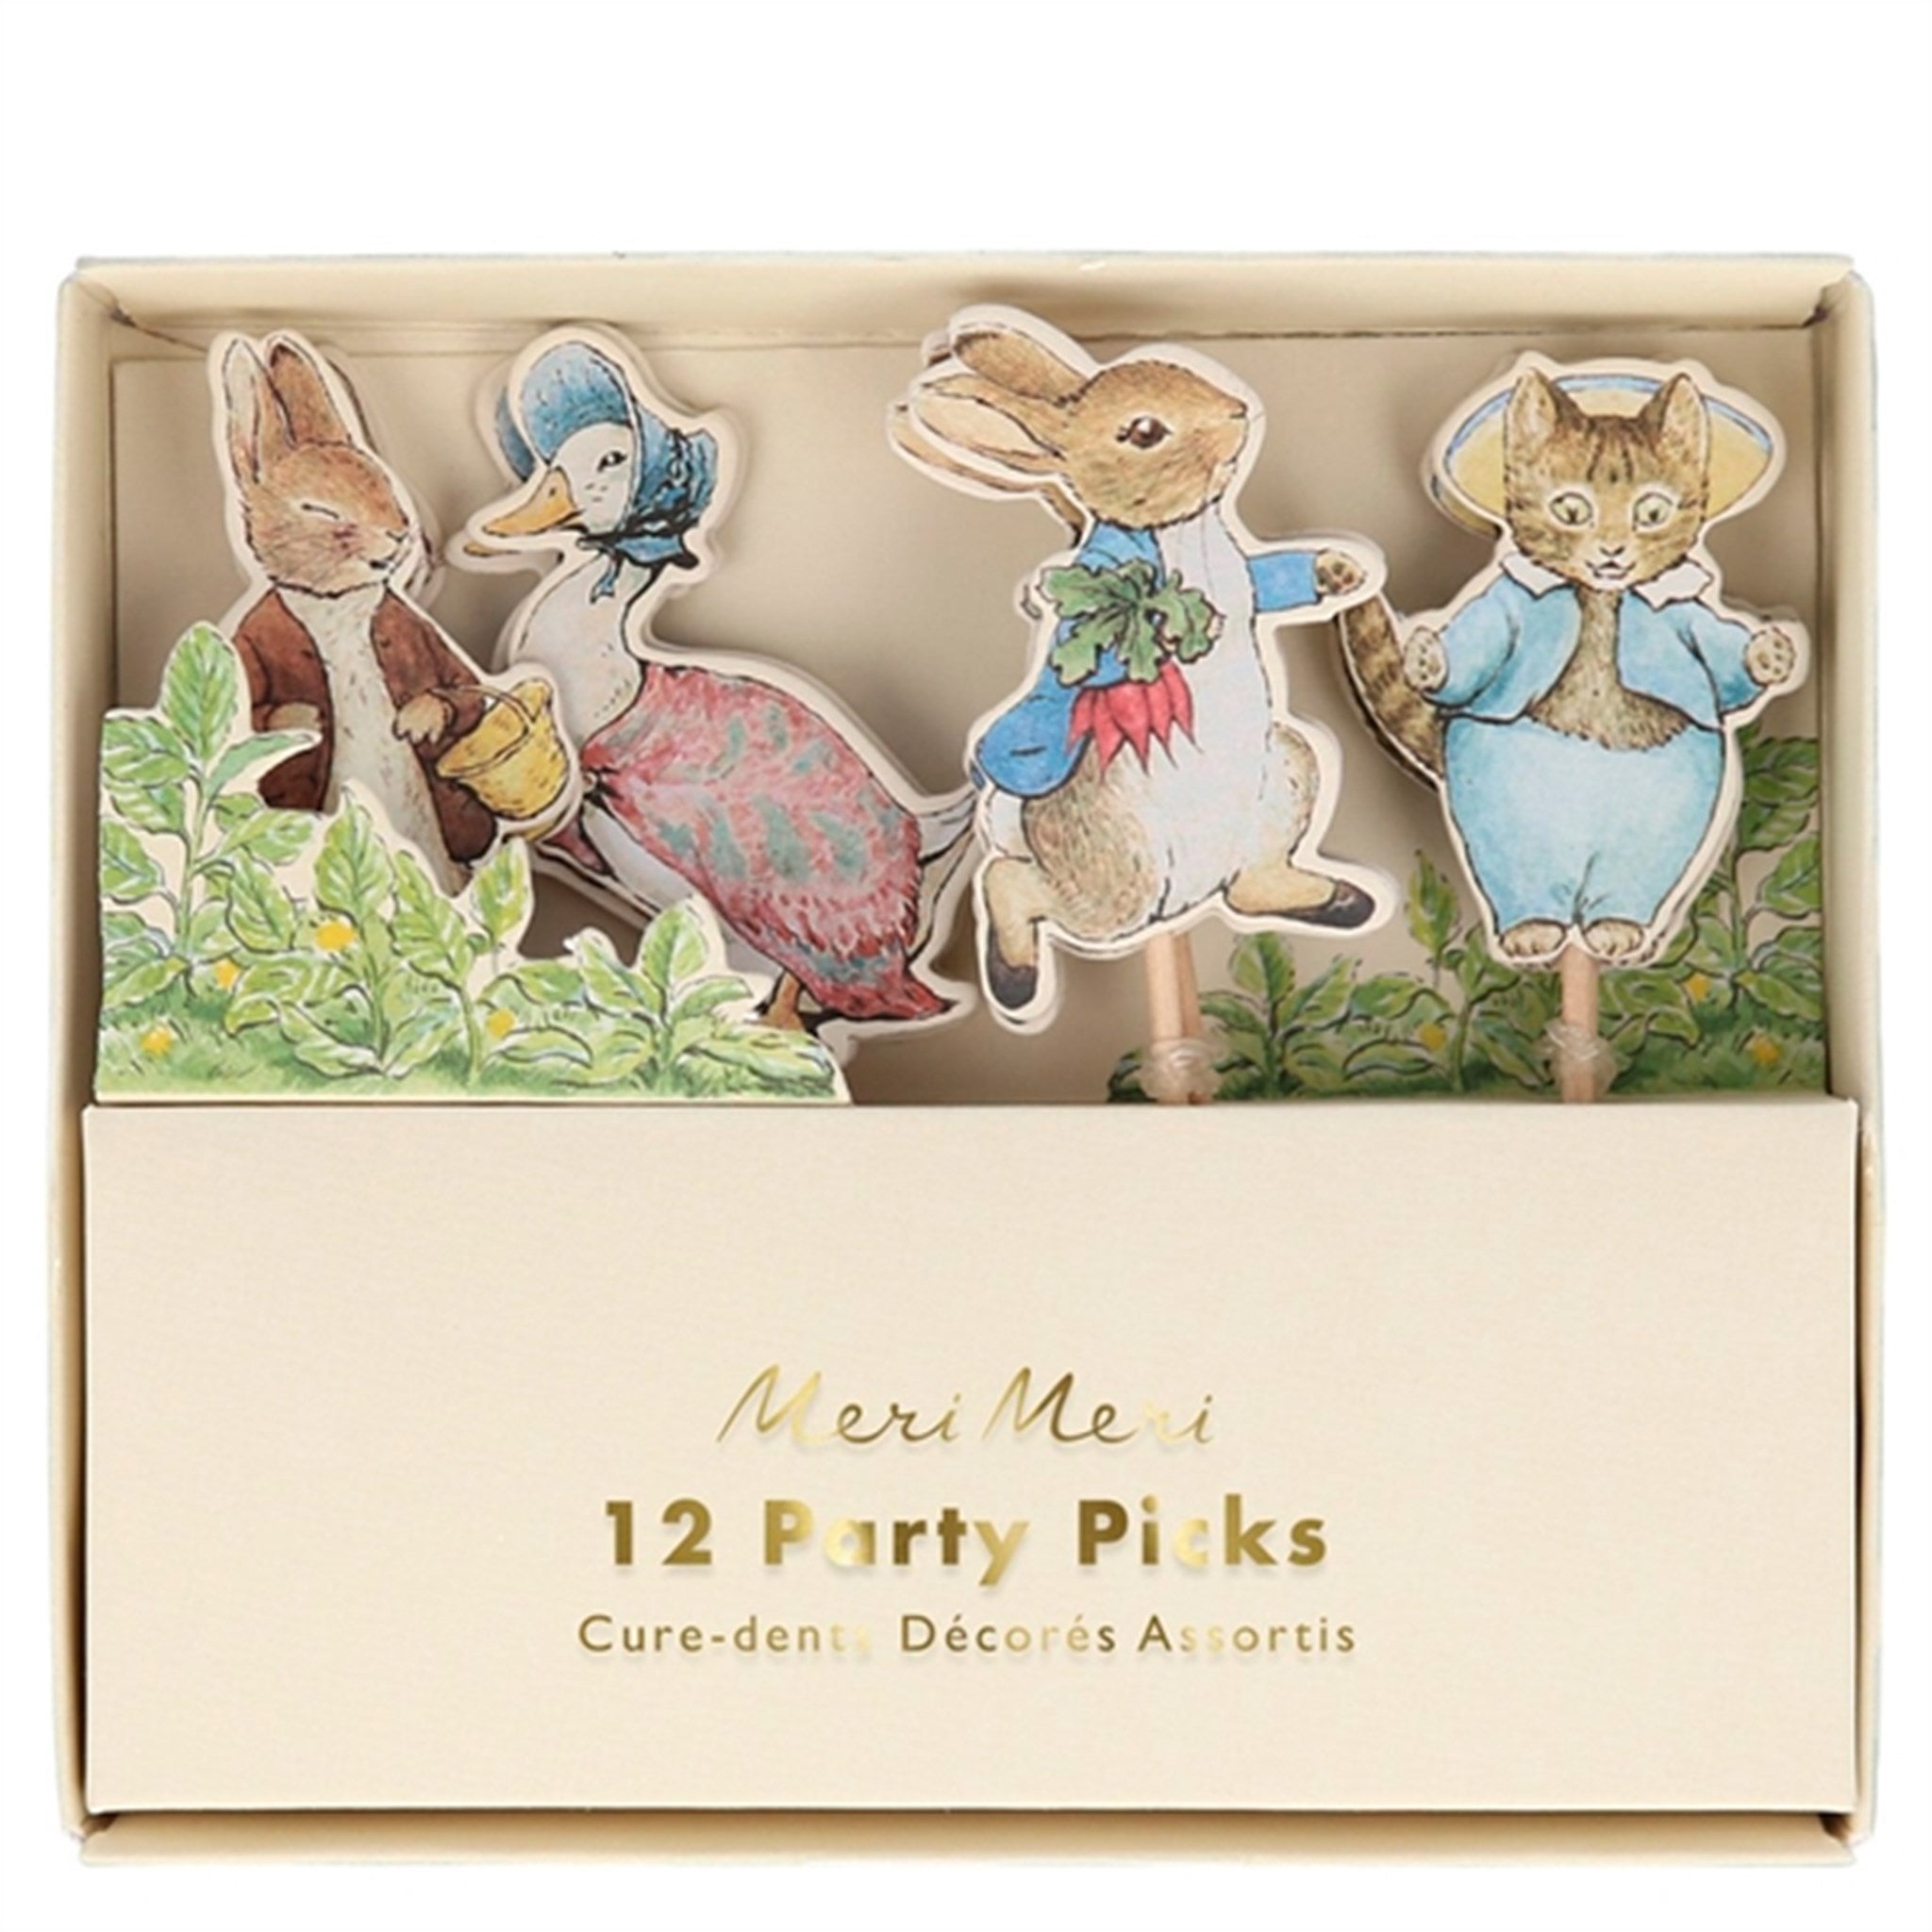 Meri Meri Peter Rabbit Party Picks